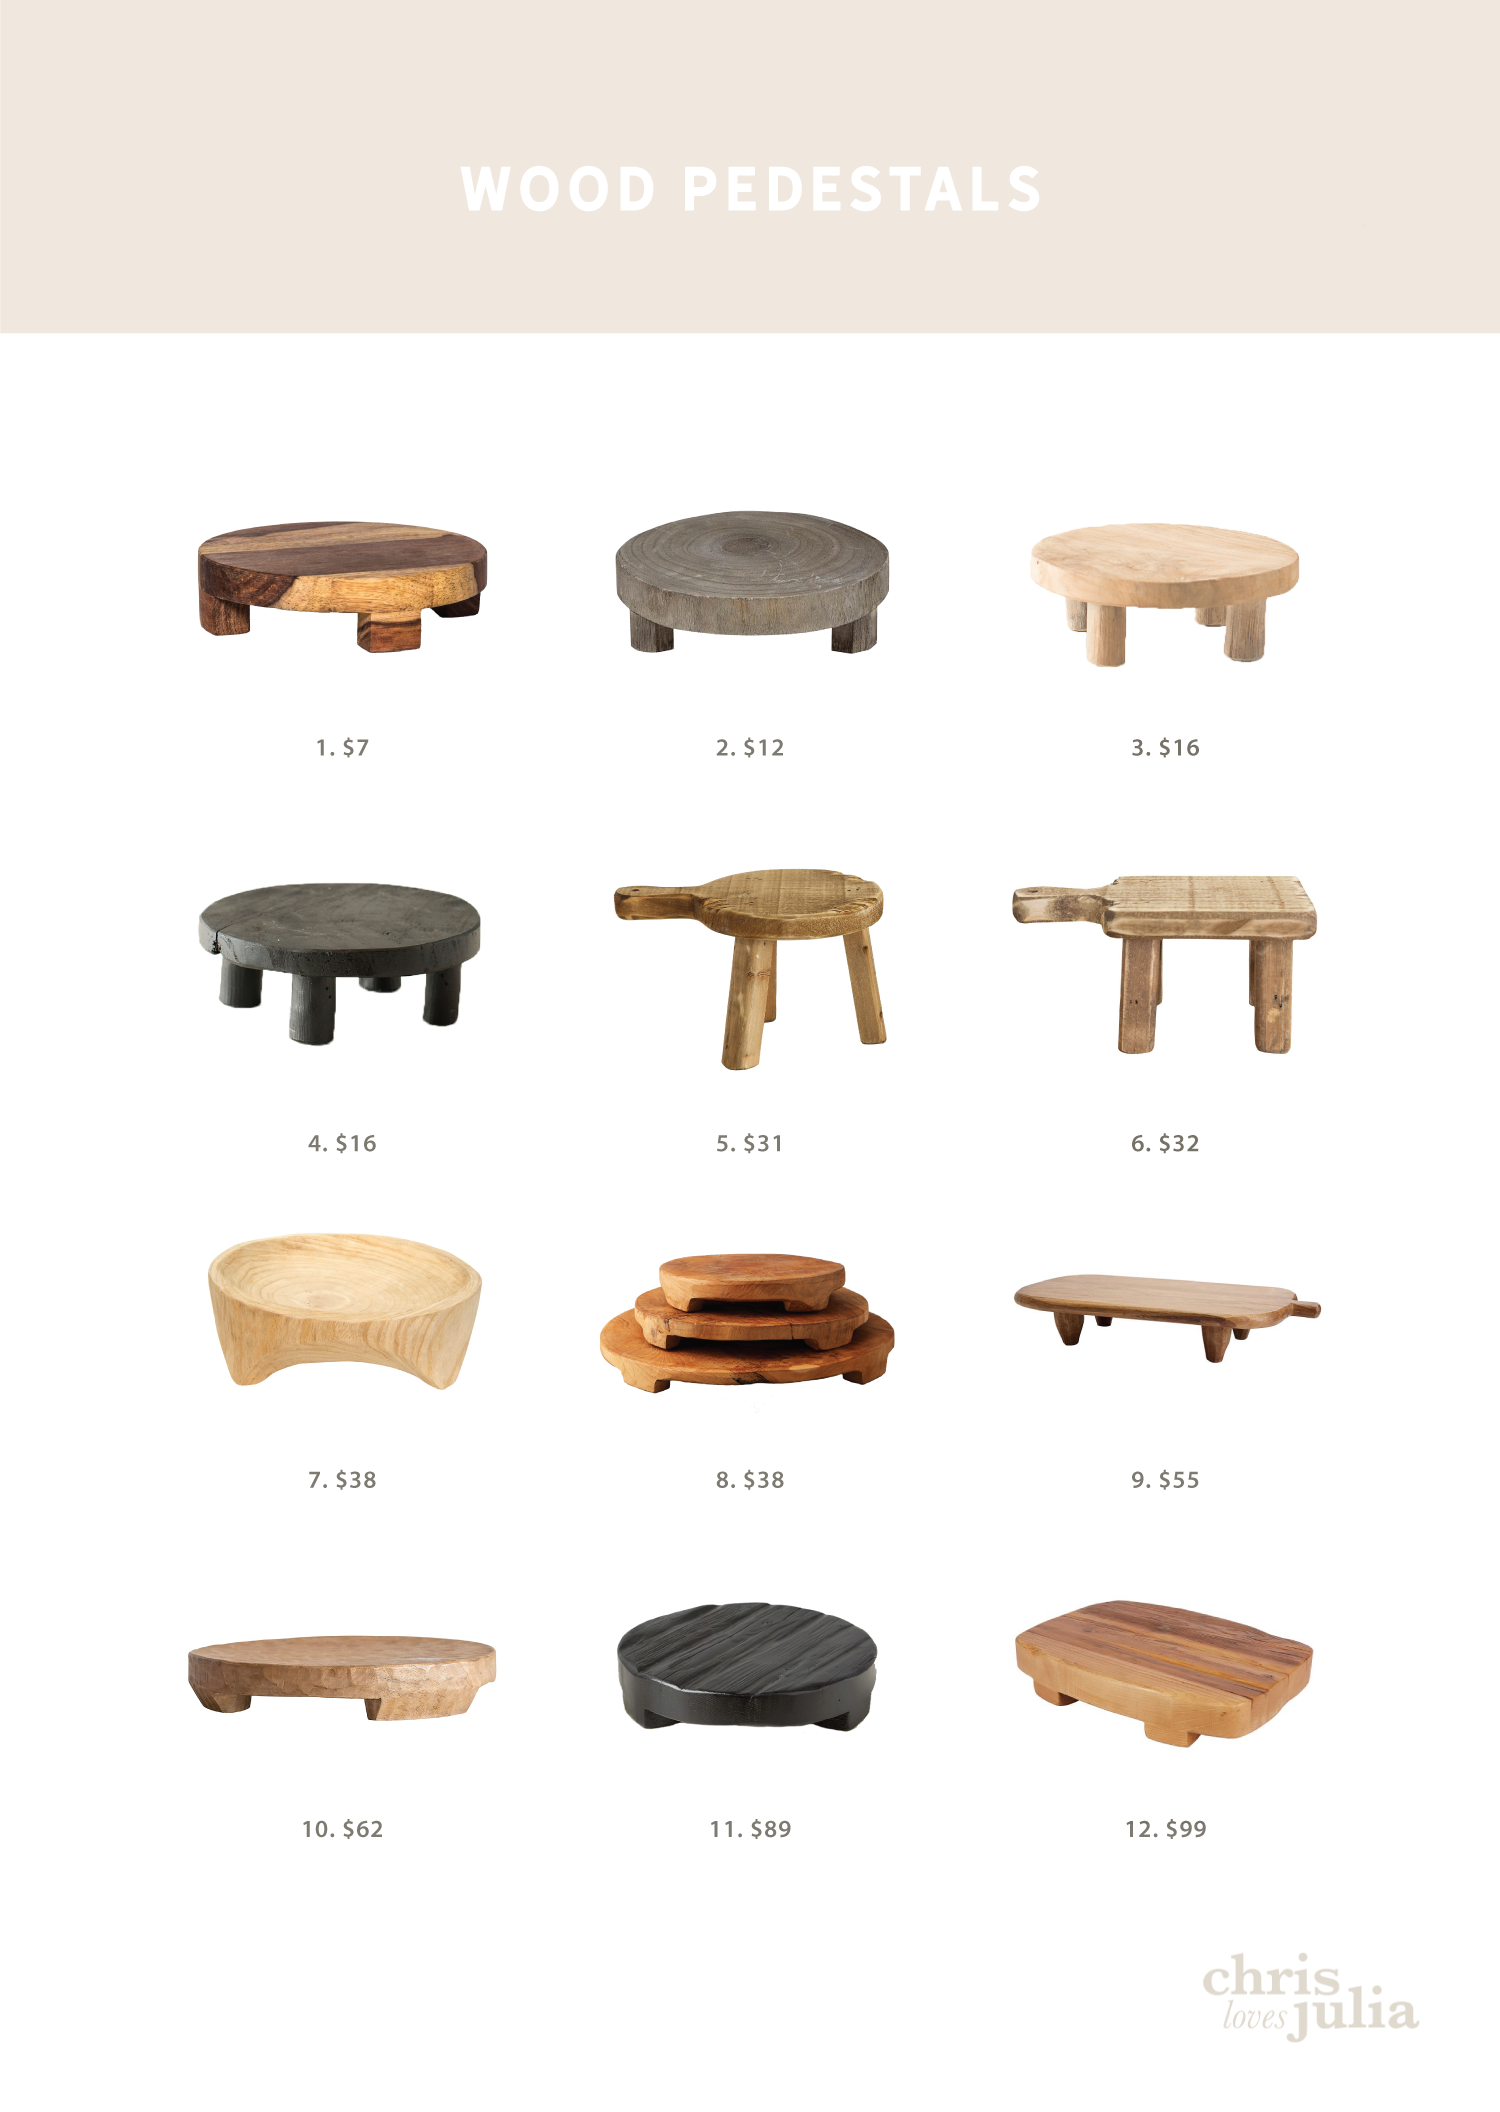 Essential Decor Wood Pedestals They